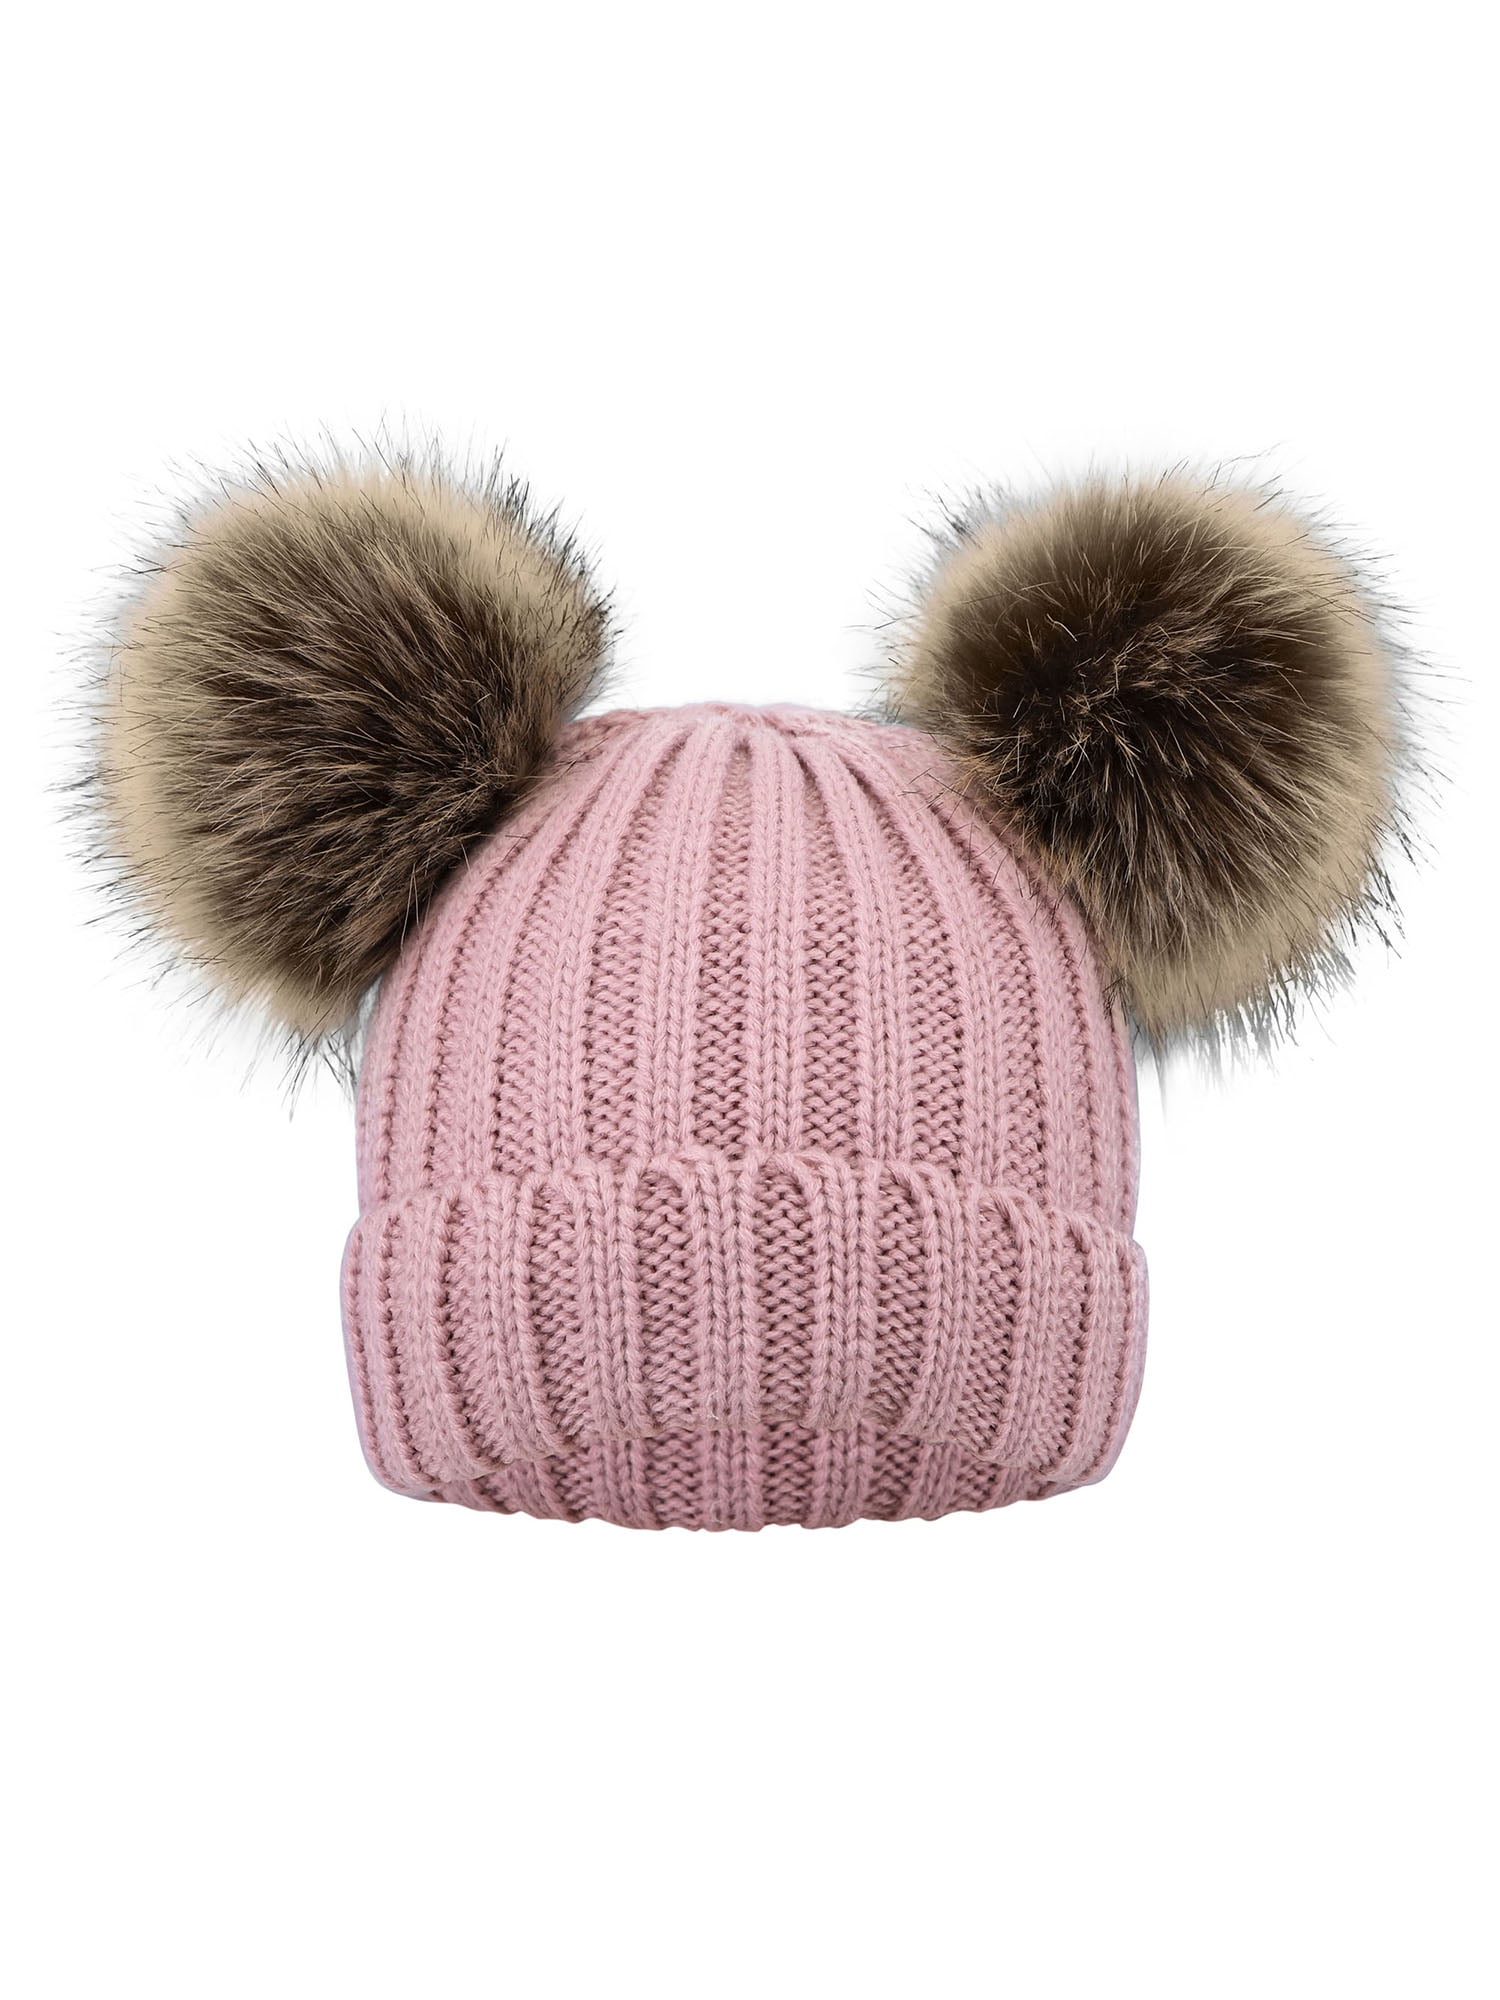 Pom Beanie Hat, Kids Hat Pom Kids Winter Pink Hat Beanie Girls Fleece